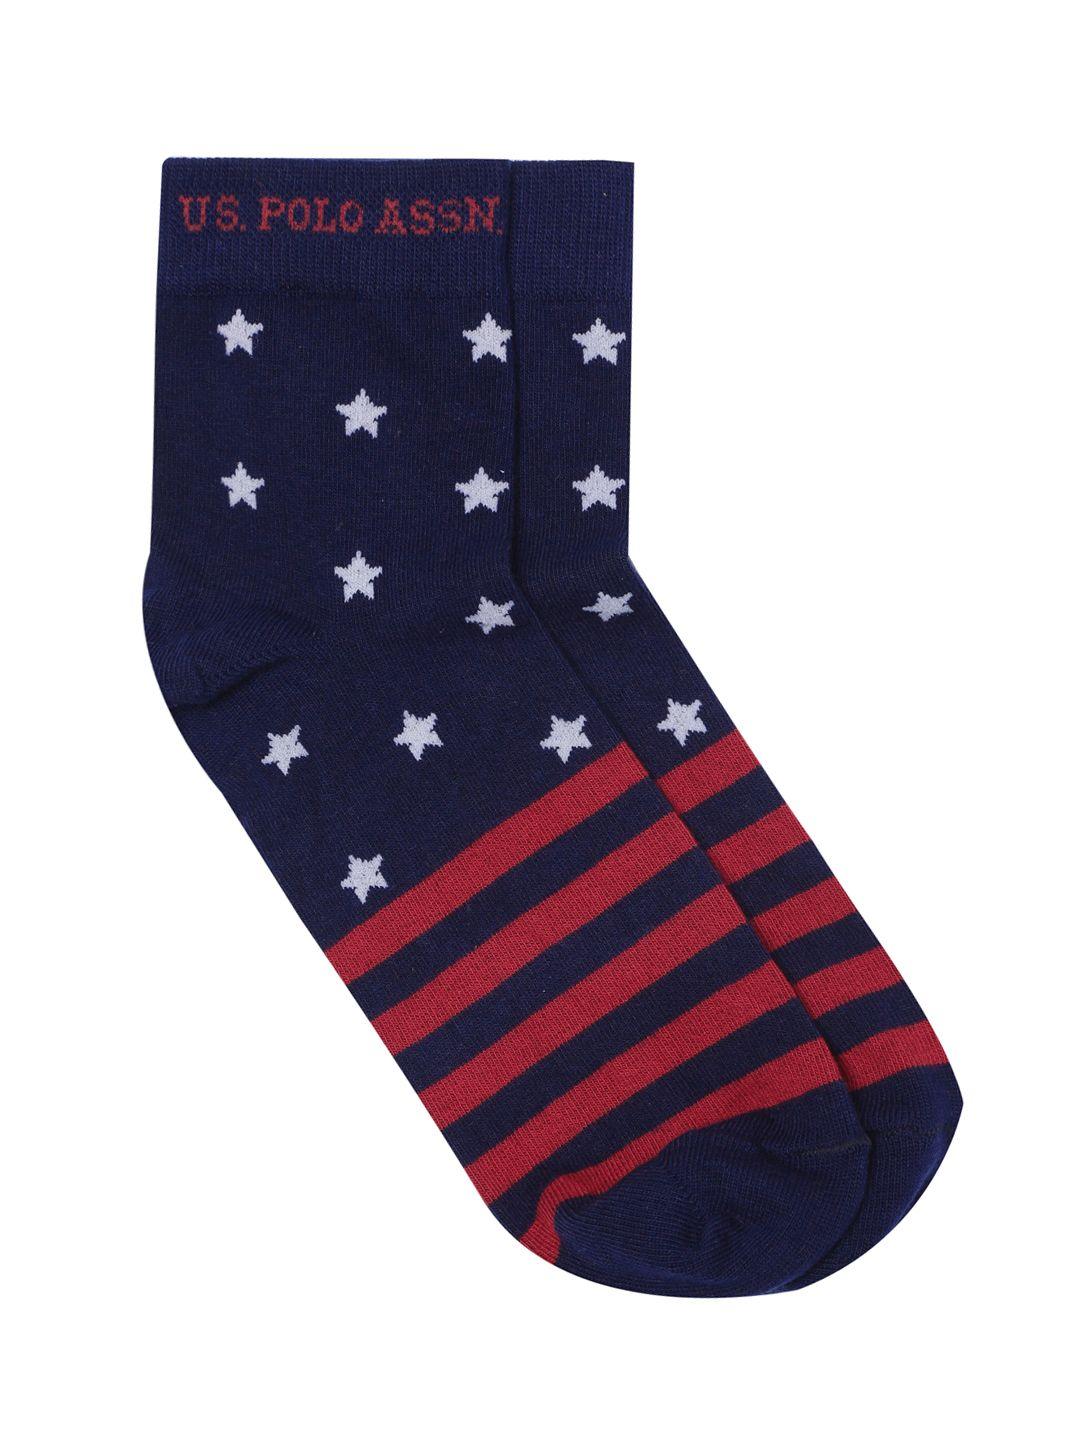 u.s. polo assn. men navy blue patterned above ankle length socks